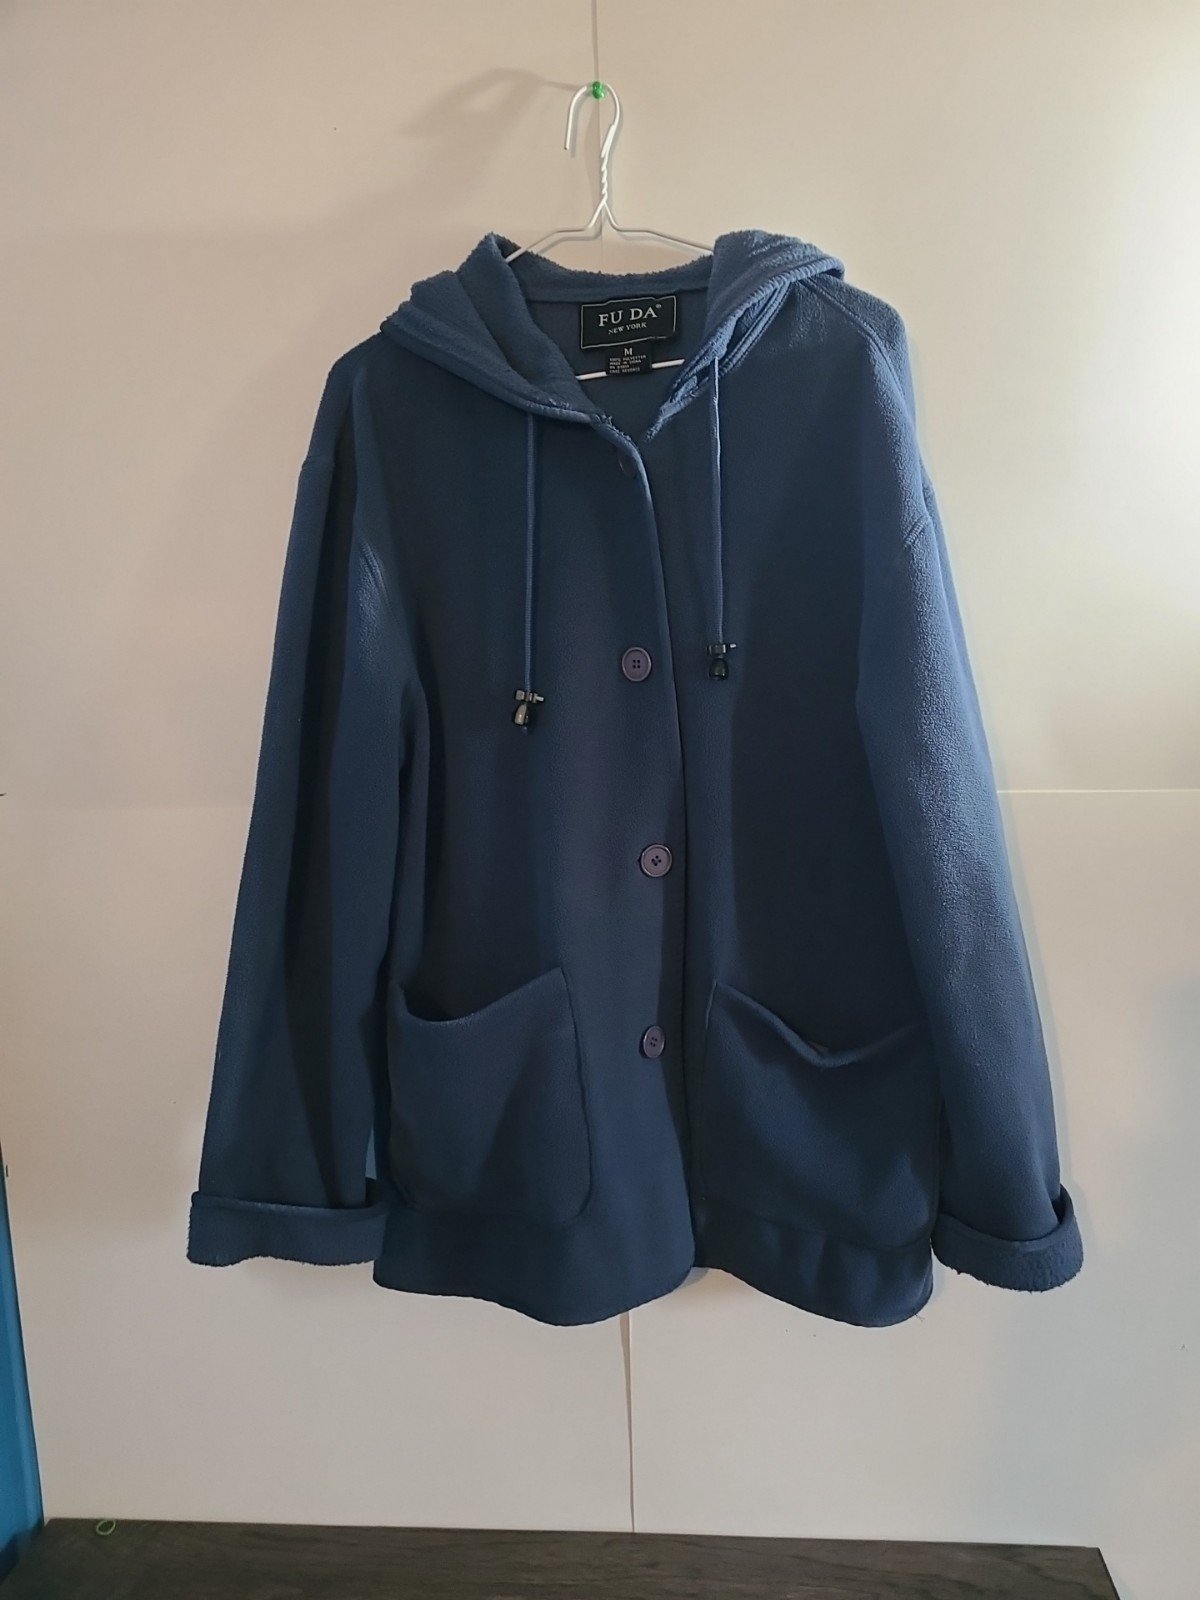 Latest  FU DA Womens Hoodie Jacket M Blue Fleece Pockets Full Button Down hOVXjmGR6 US Sale